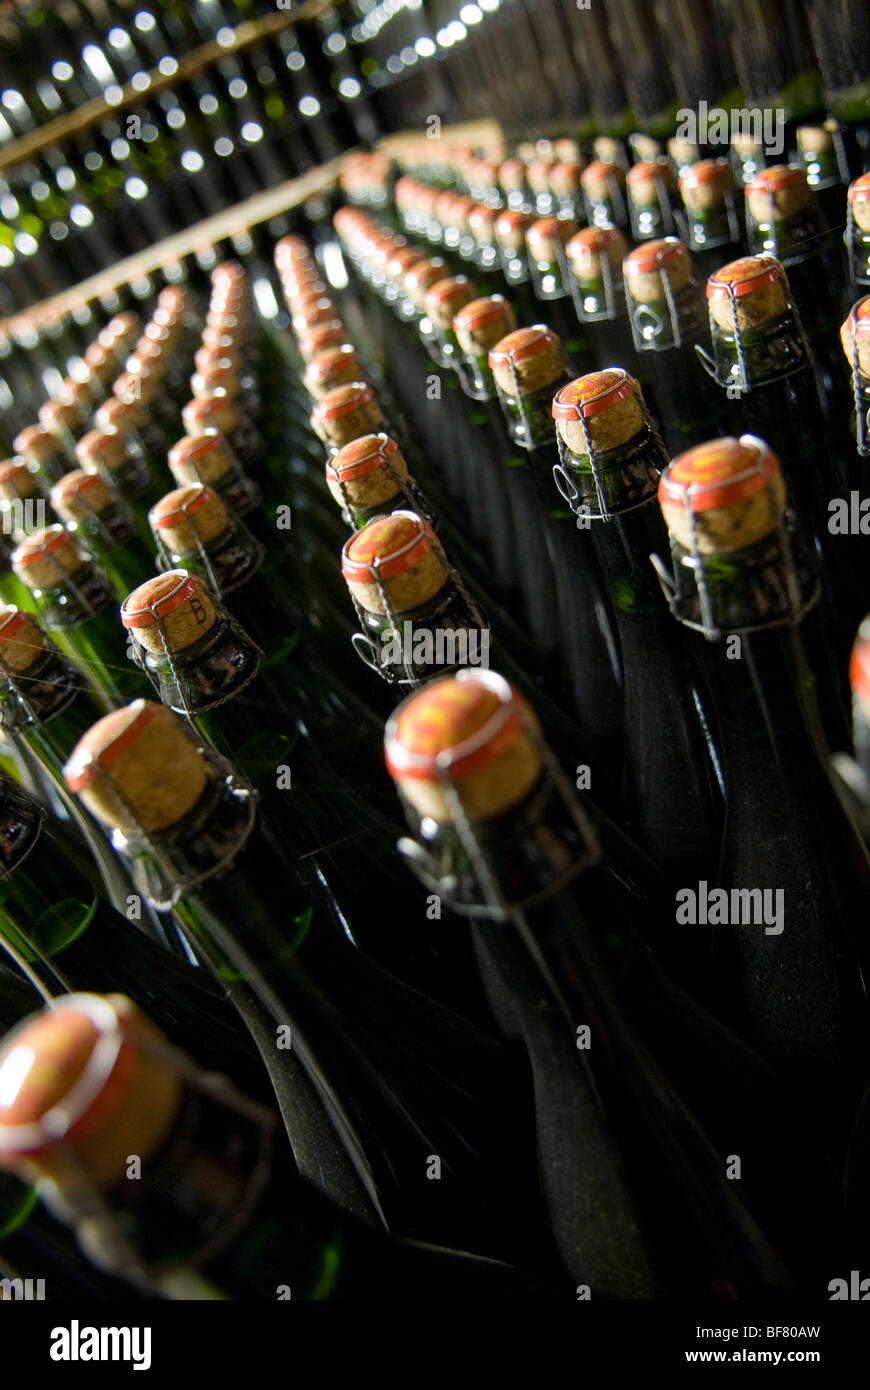 Bottles of cider Stock Photo